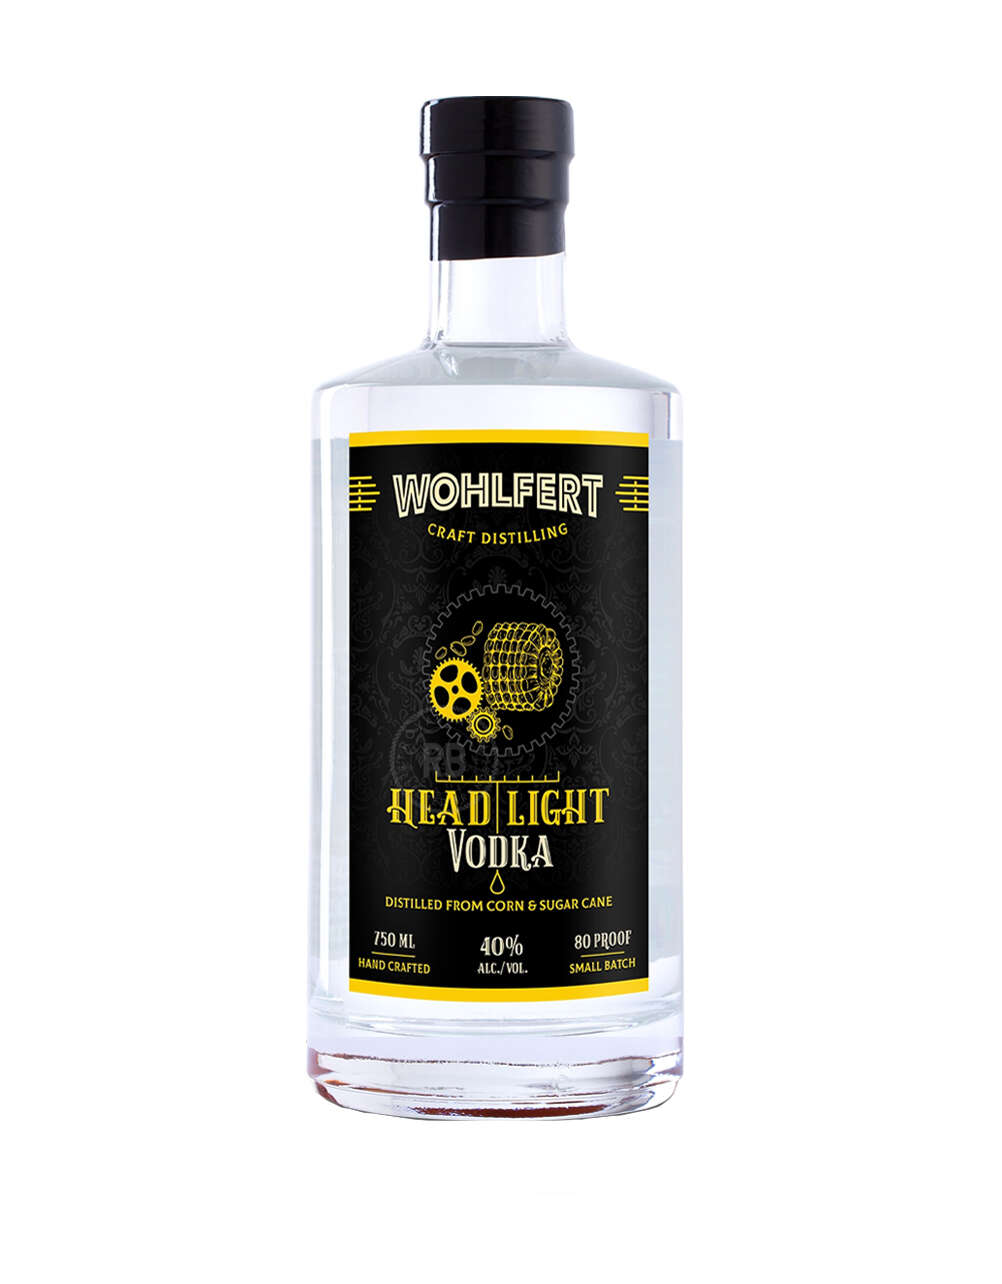 Wohlfert Craft Distilling Head light Vodka